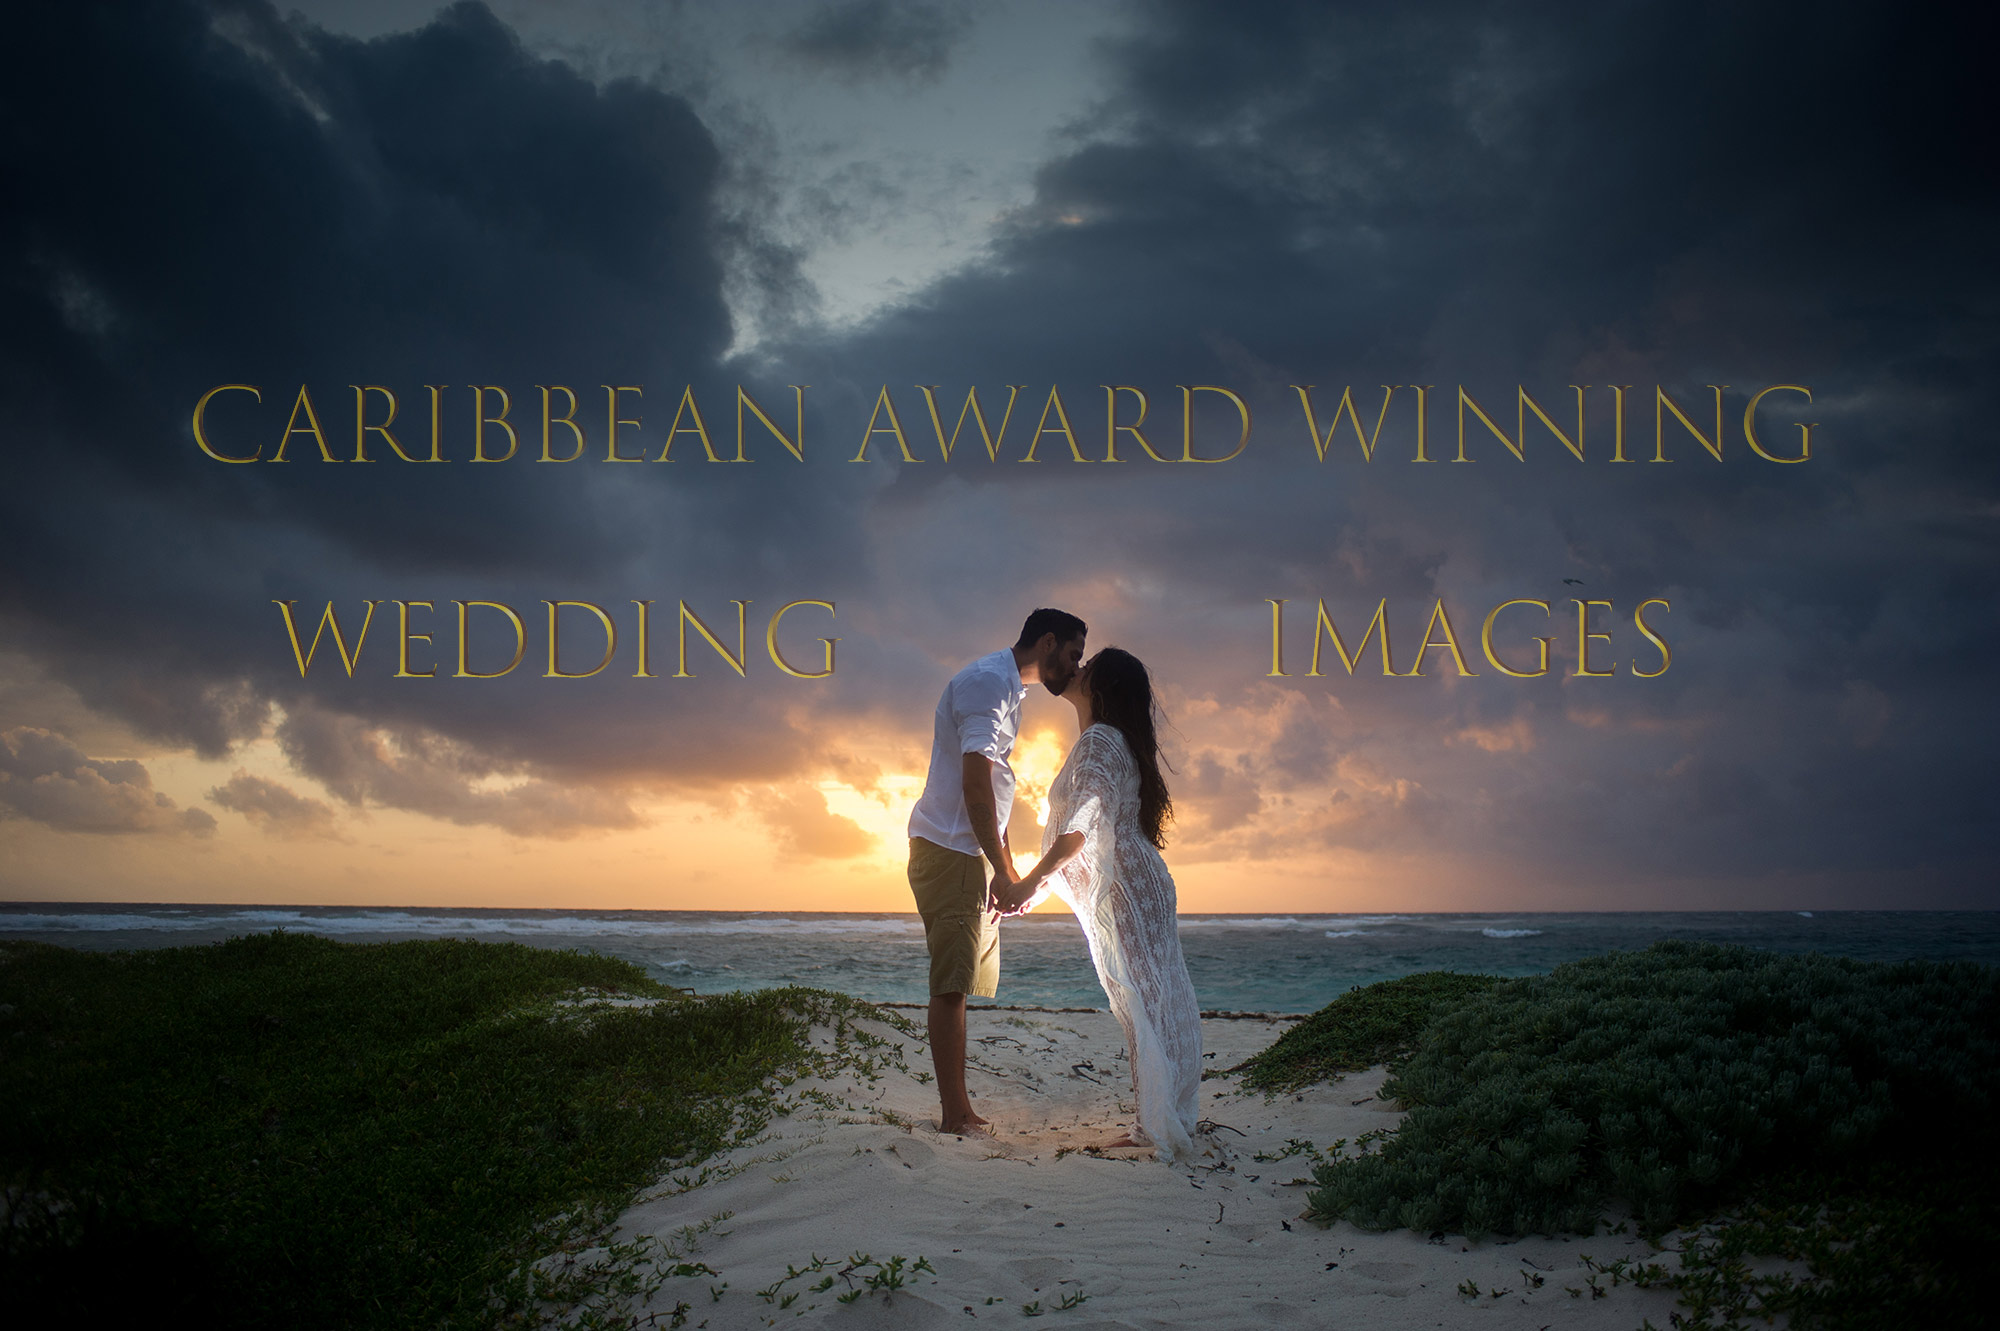 Award winning wedding photography